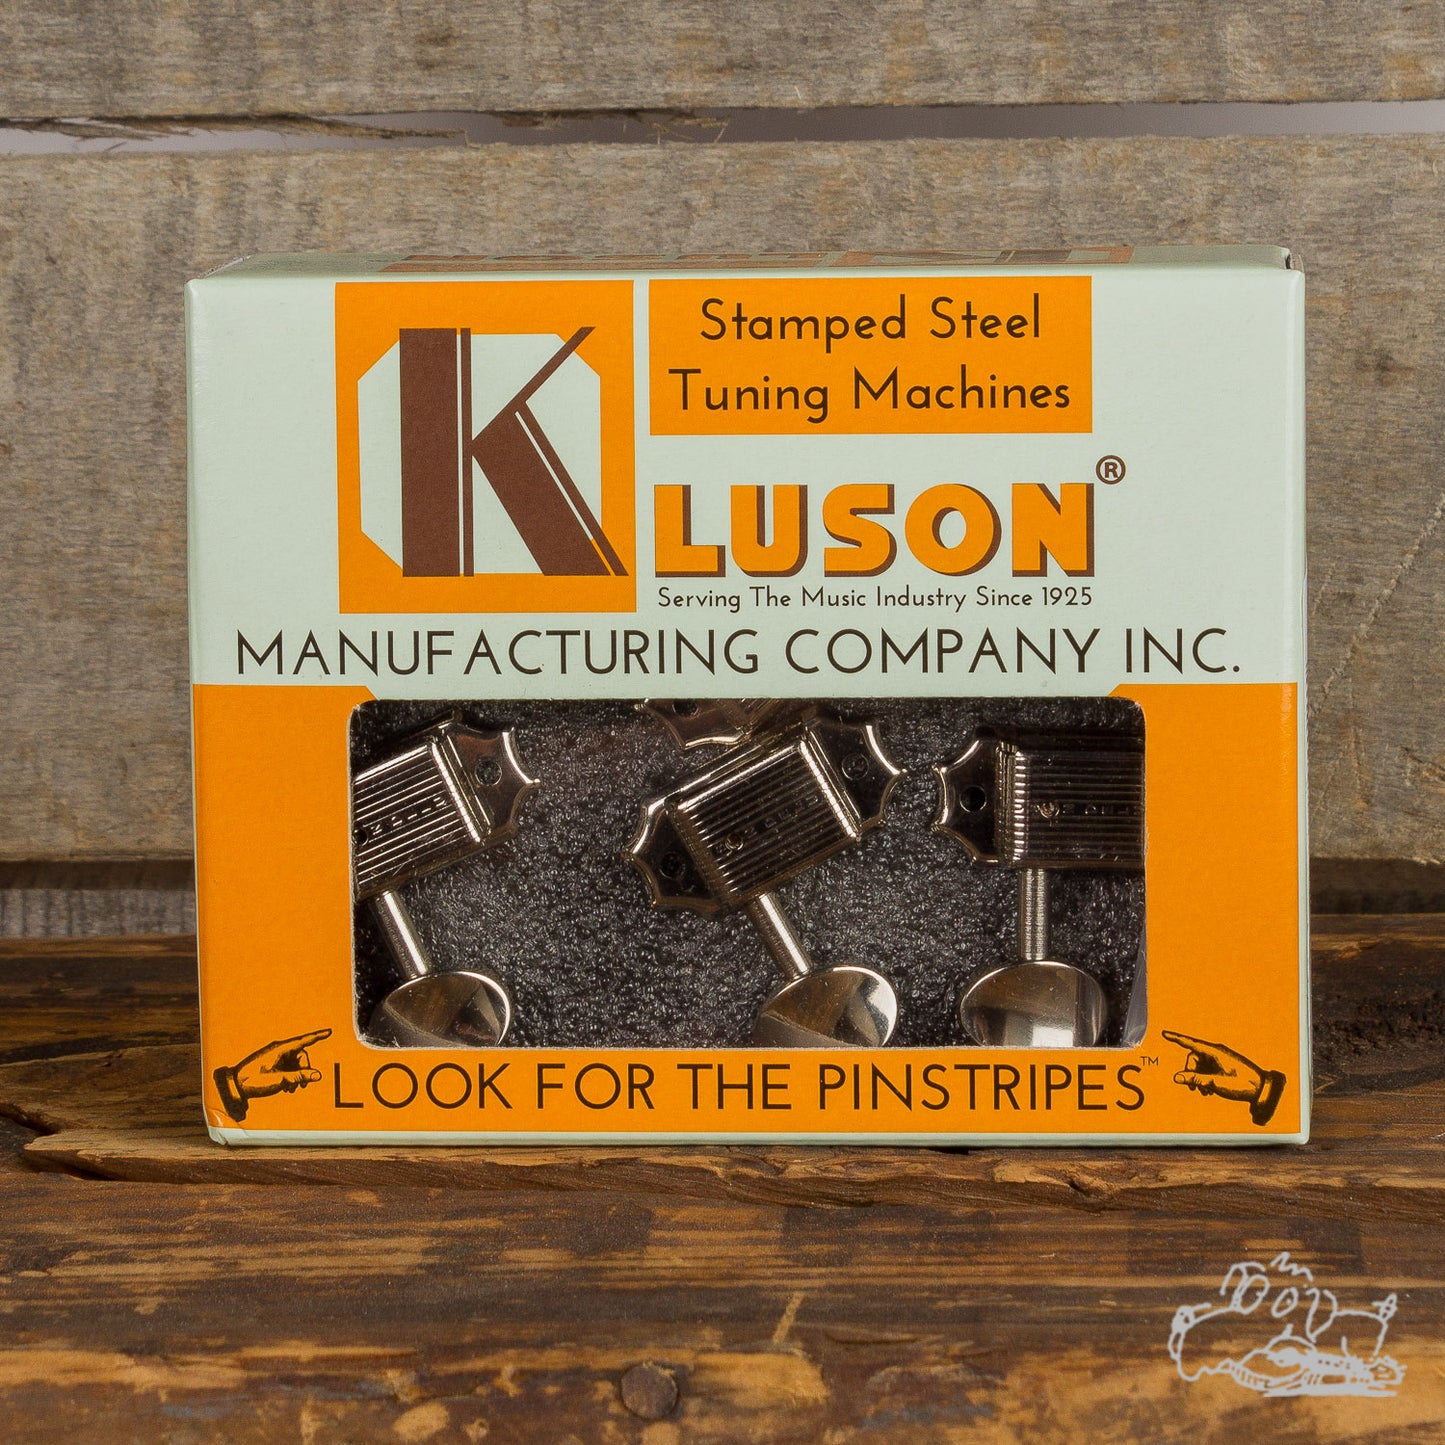 Kluson 3x3 Single Line Tuners in Metal or Plastic